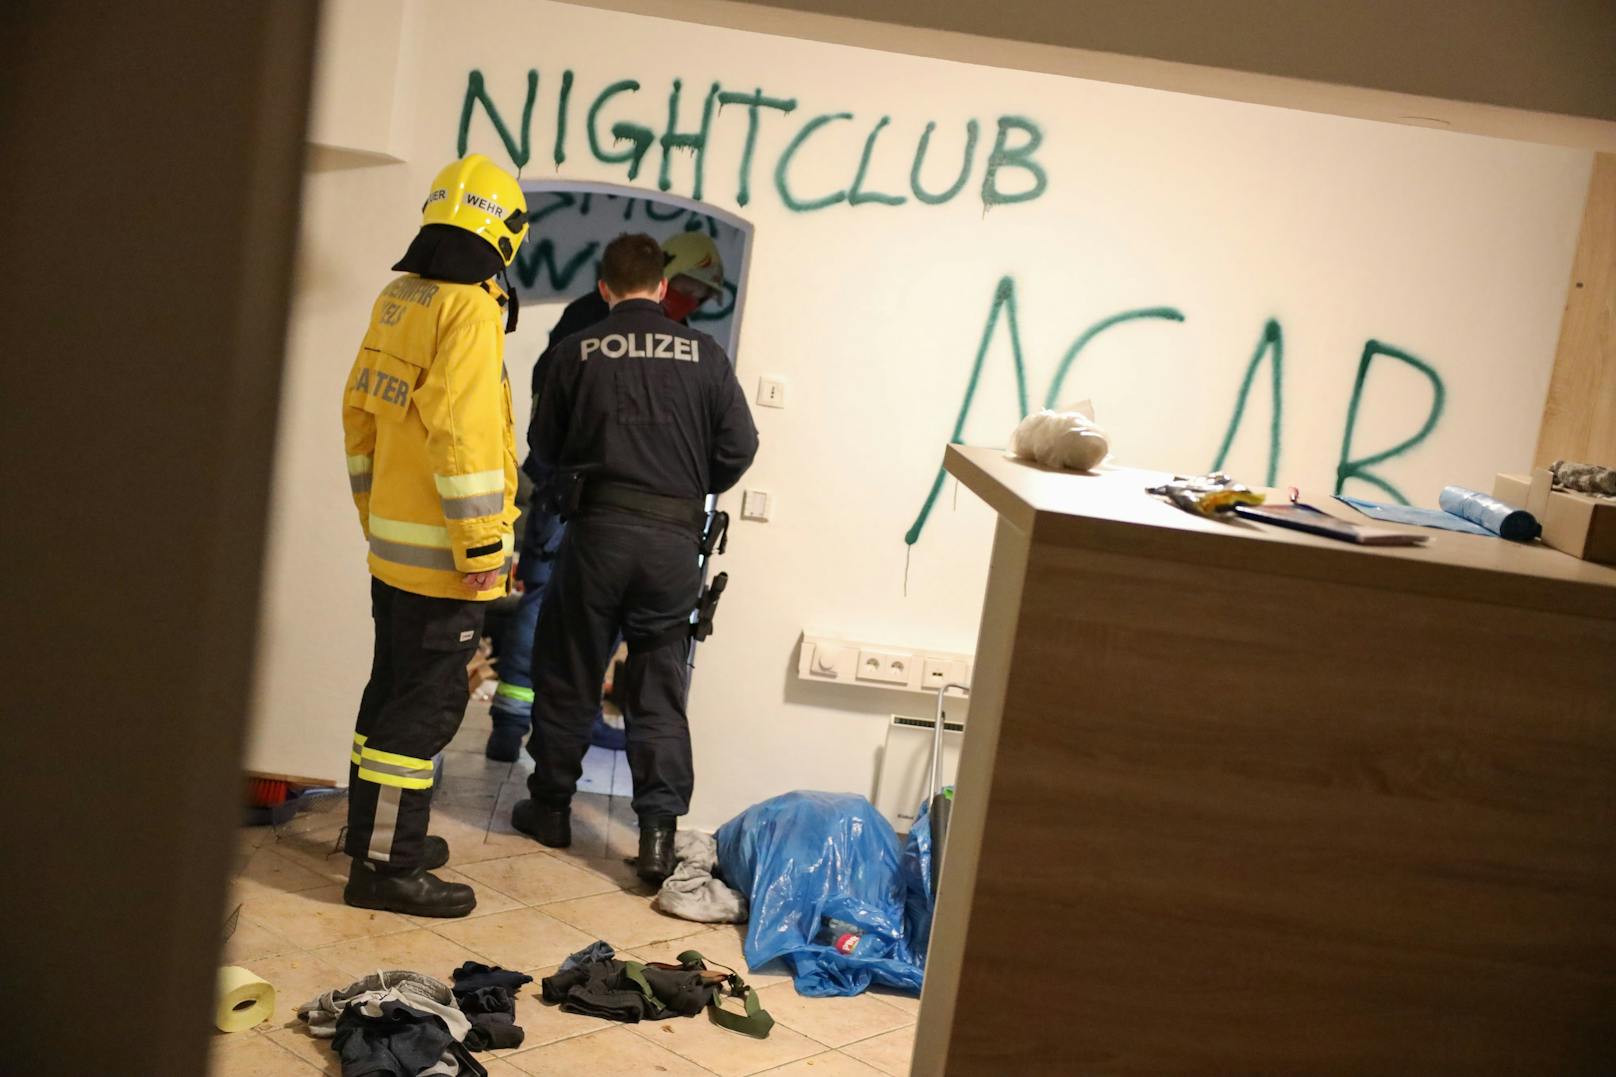 An den Wänden des Jugendclubs gab es Schmierereien mit Beschimpfungen gegen Polizisten.